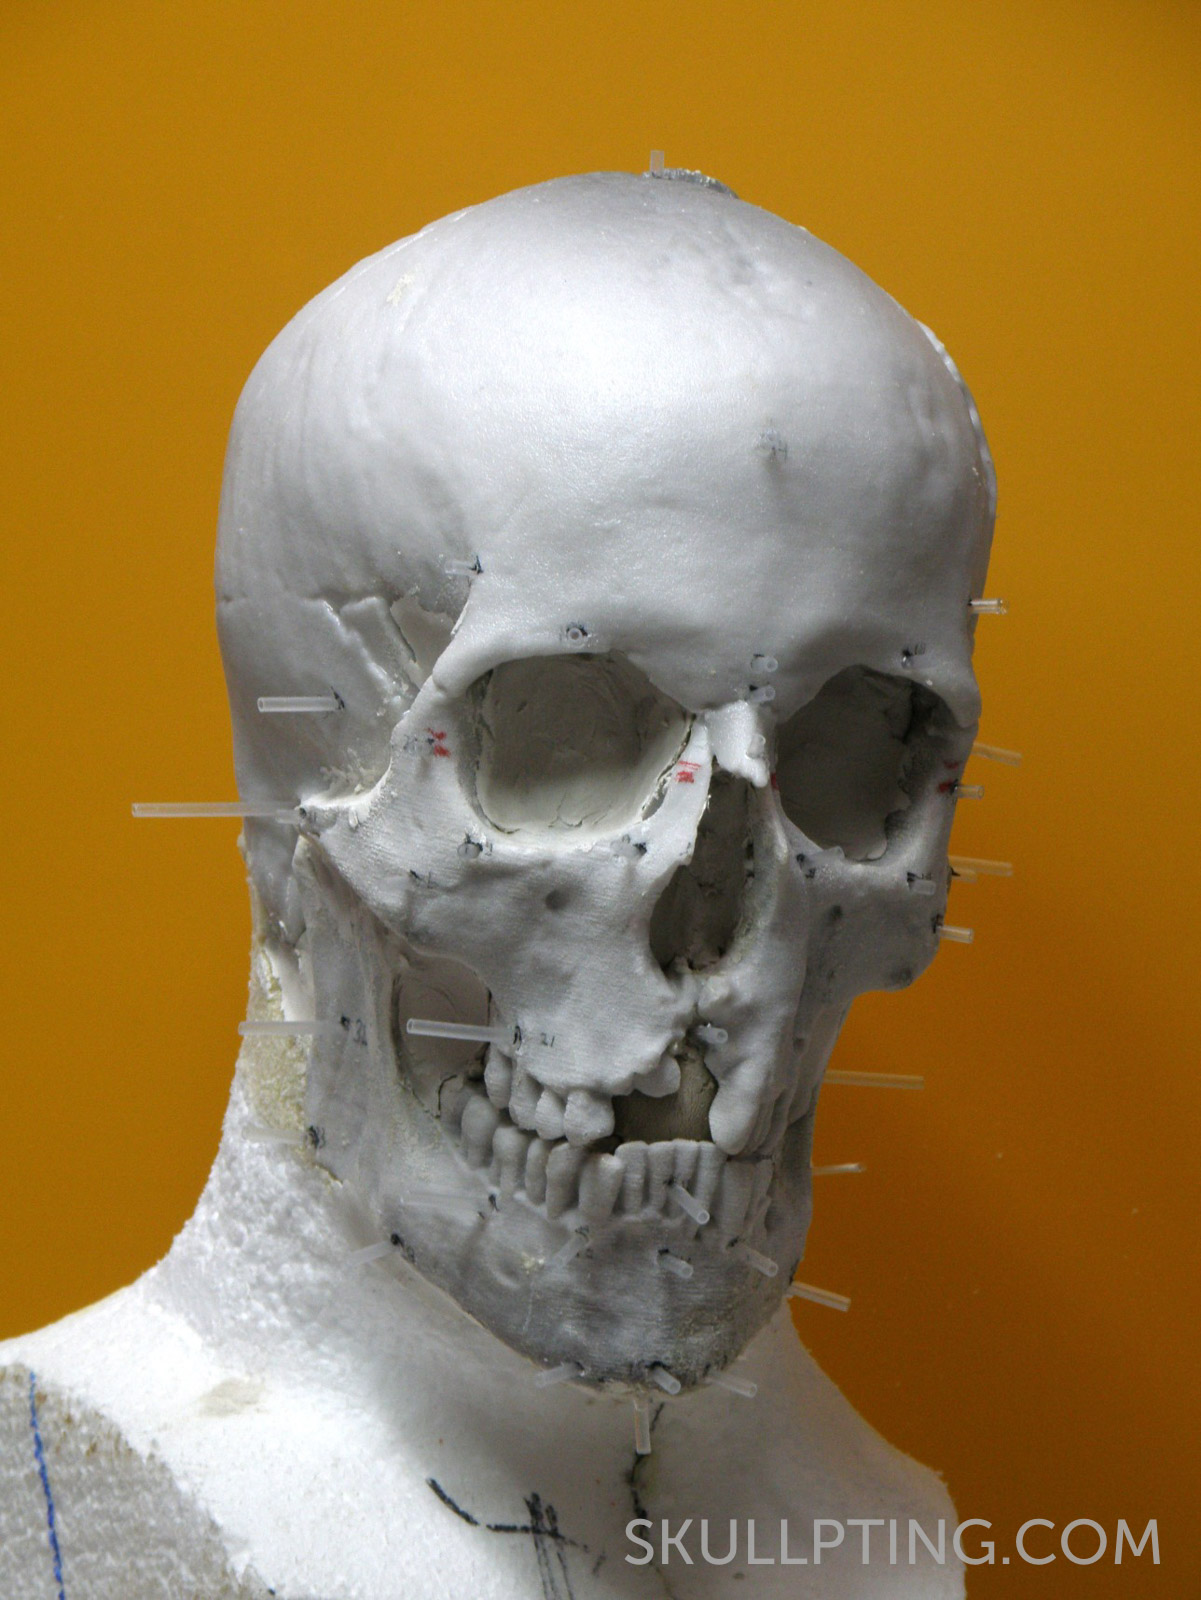 Copy of the skull